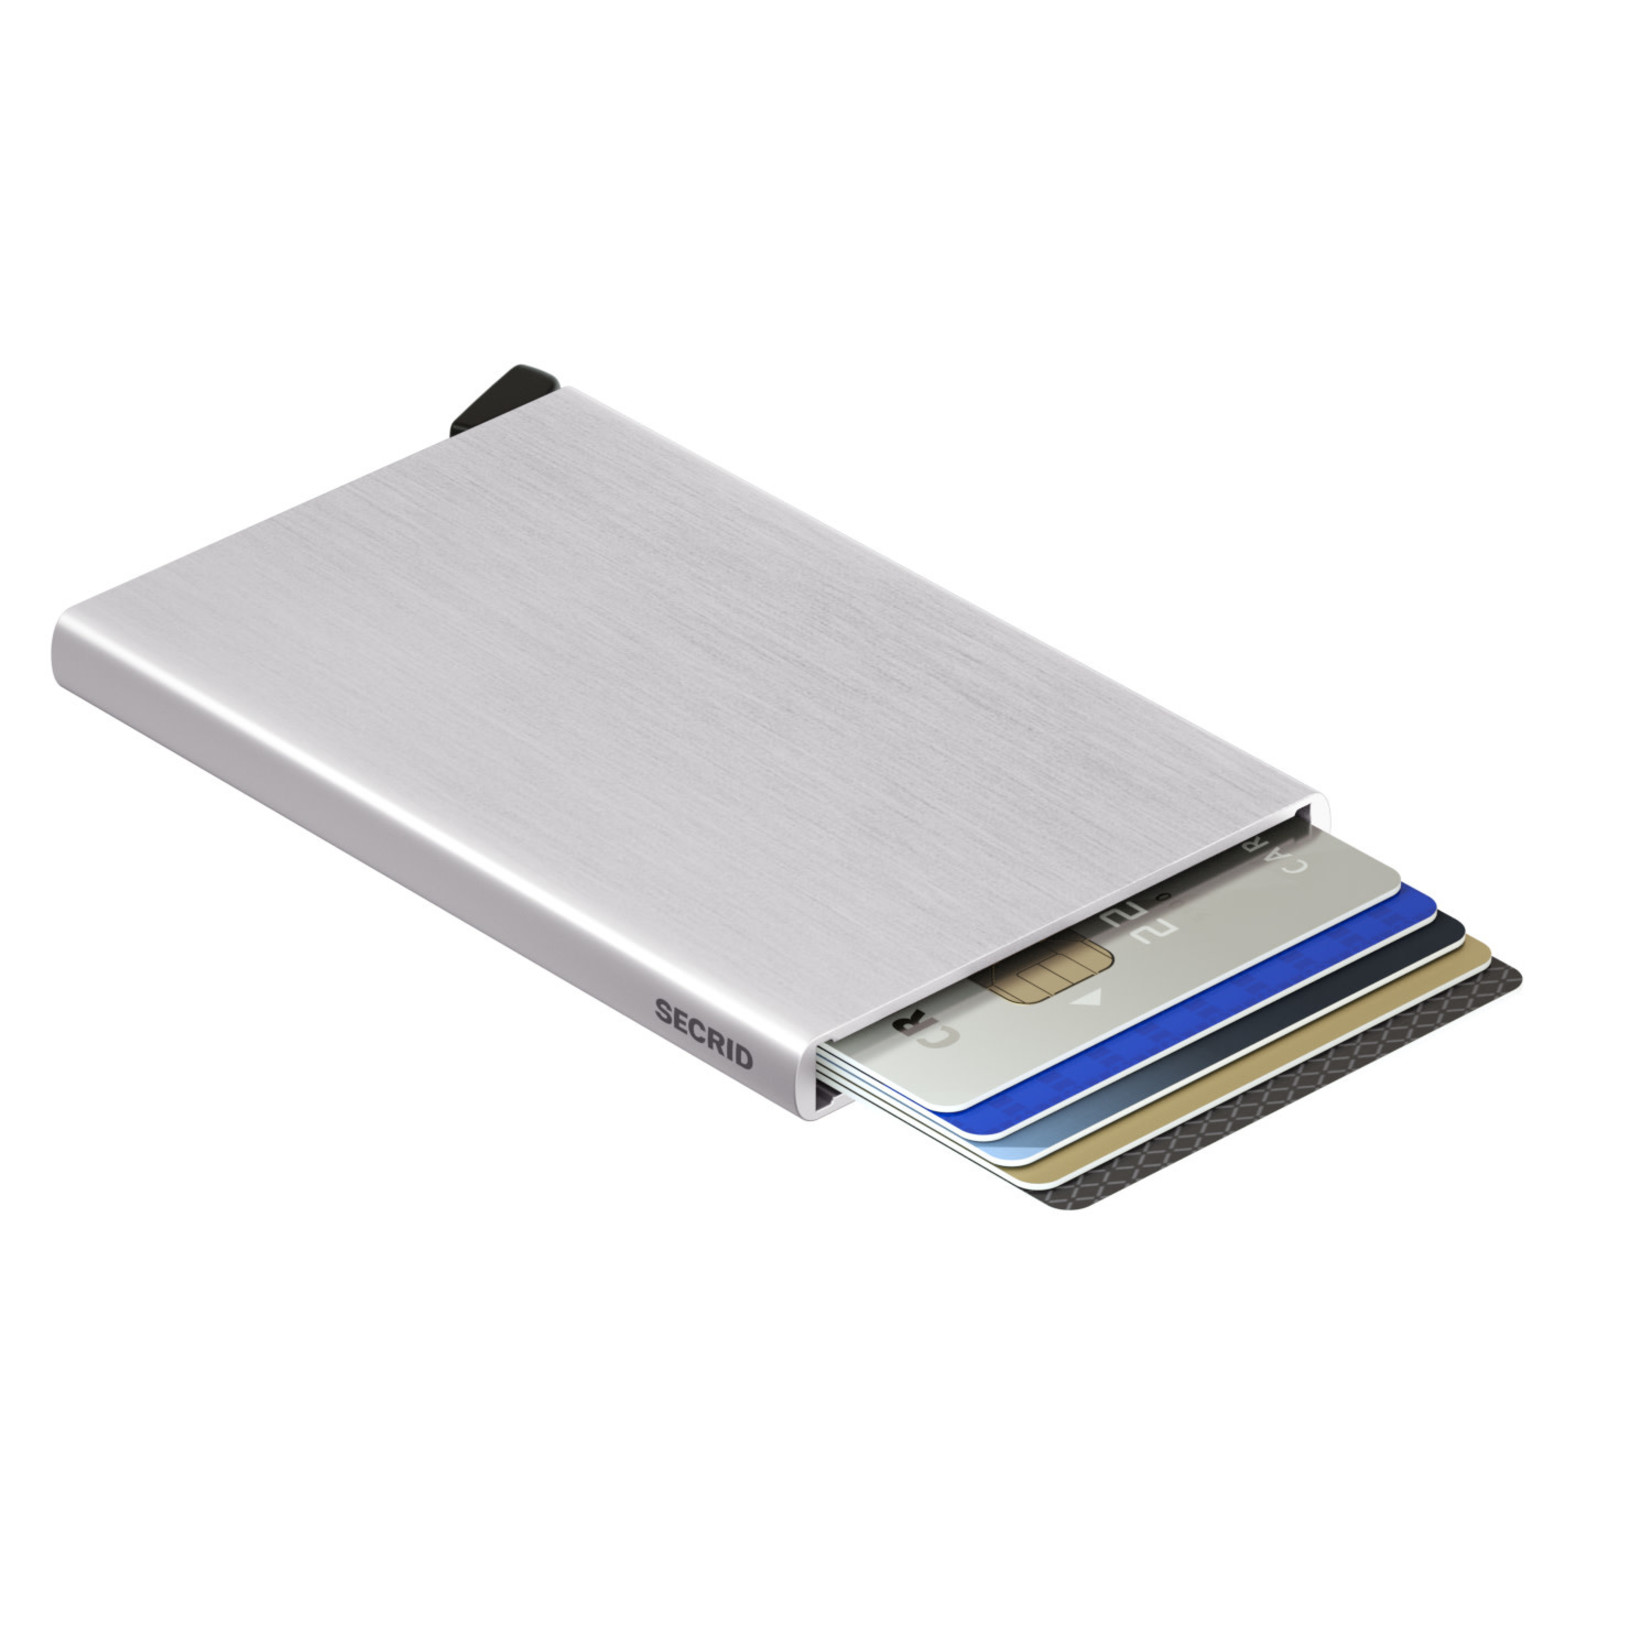 SECRID SECRID Cardprotector Brushed - Silver